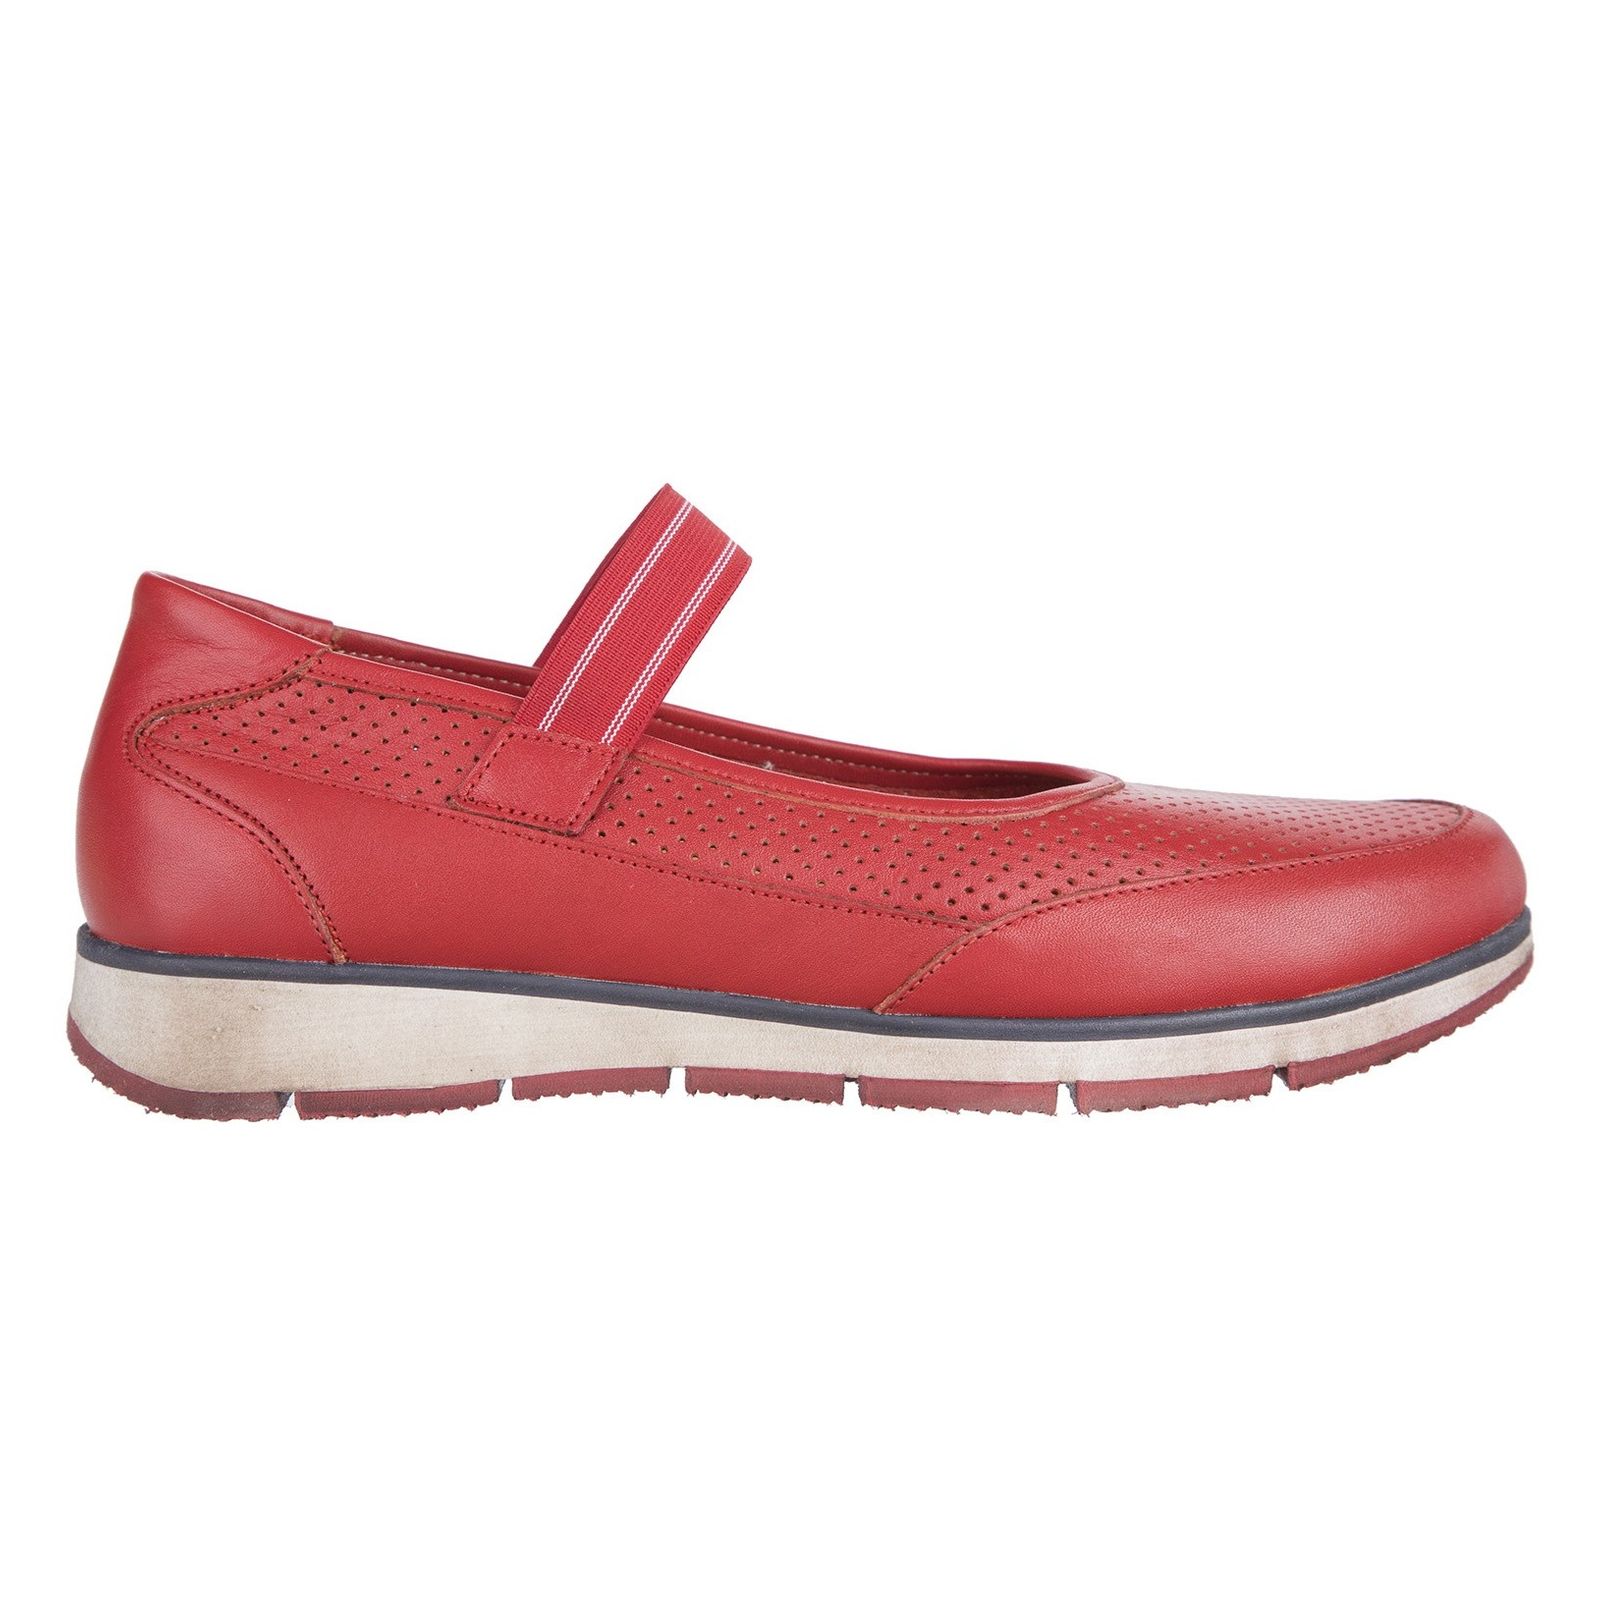 کفش تخت چرم زنانه - برتونیکس - قرمز - 2